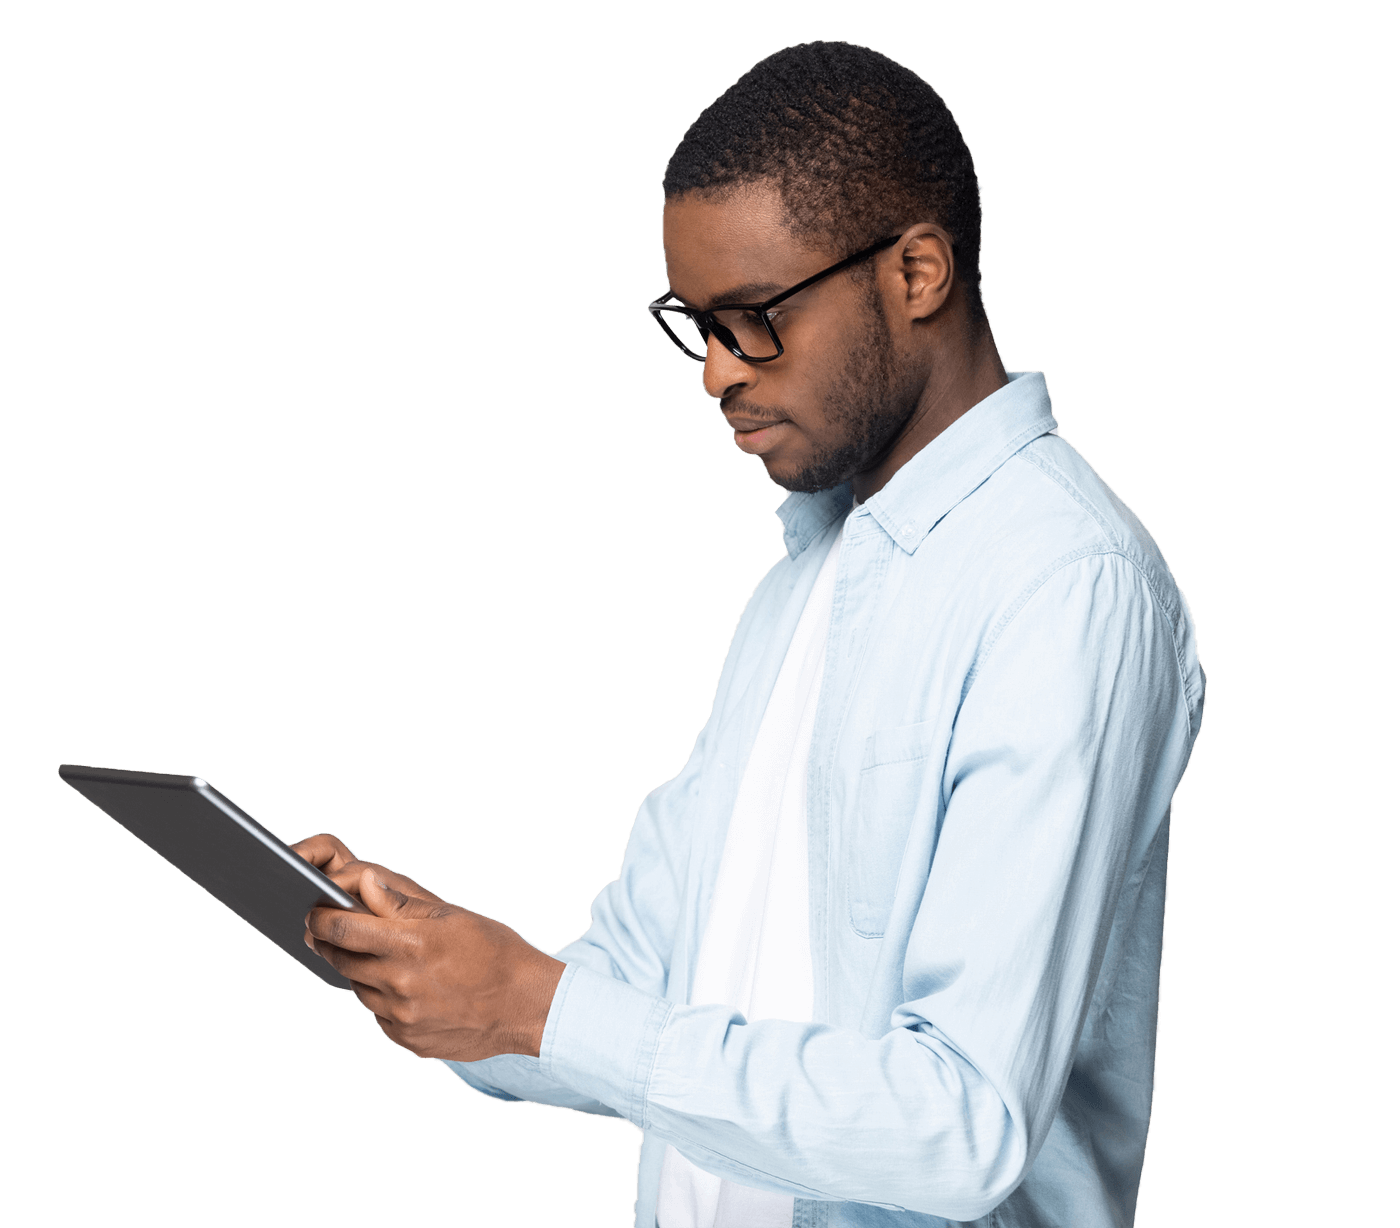 Man reading telehealth industry news on an iPad